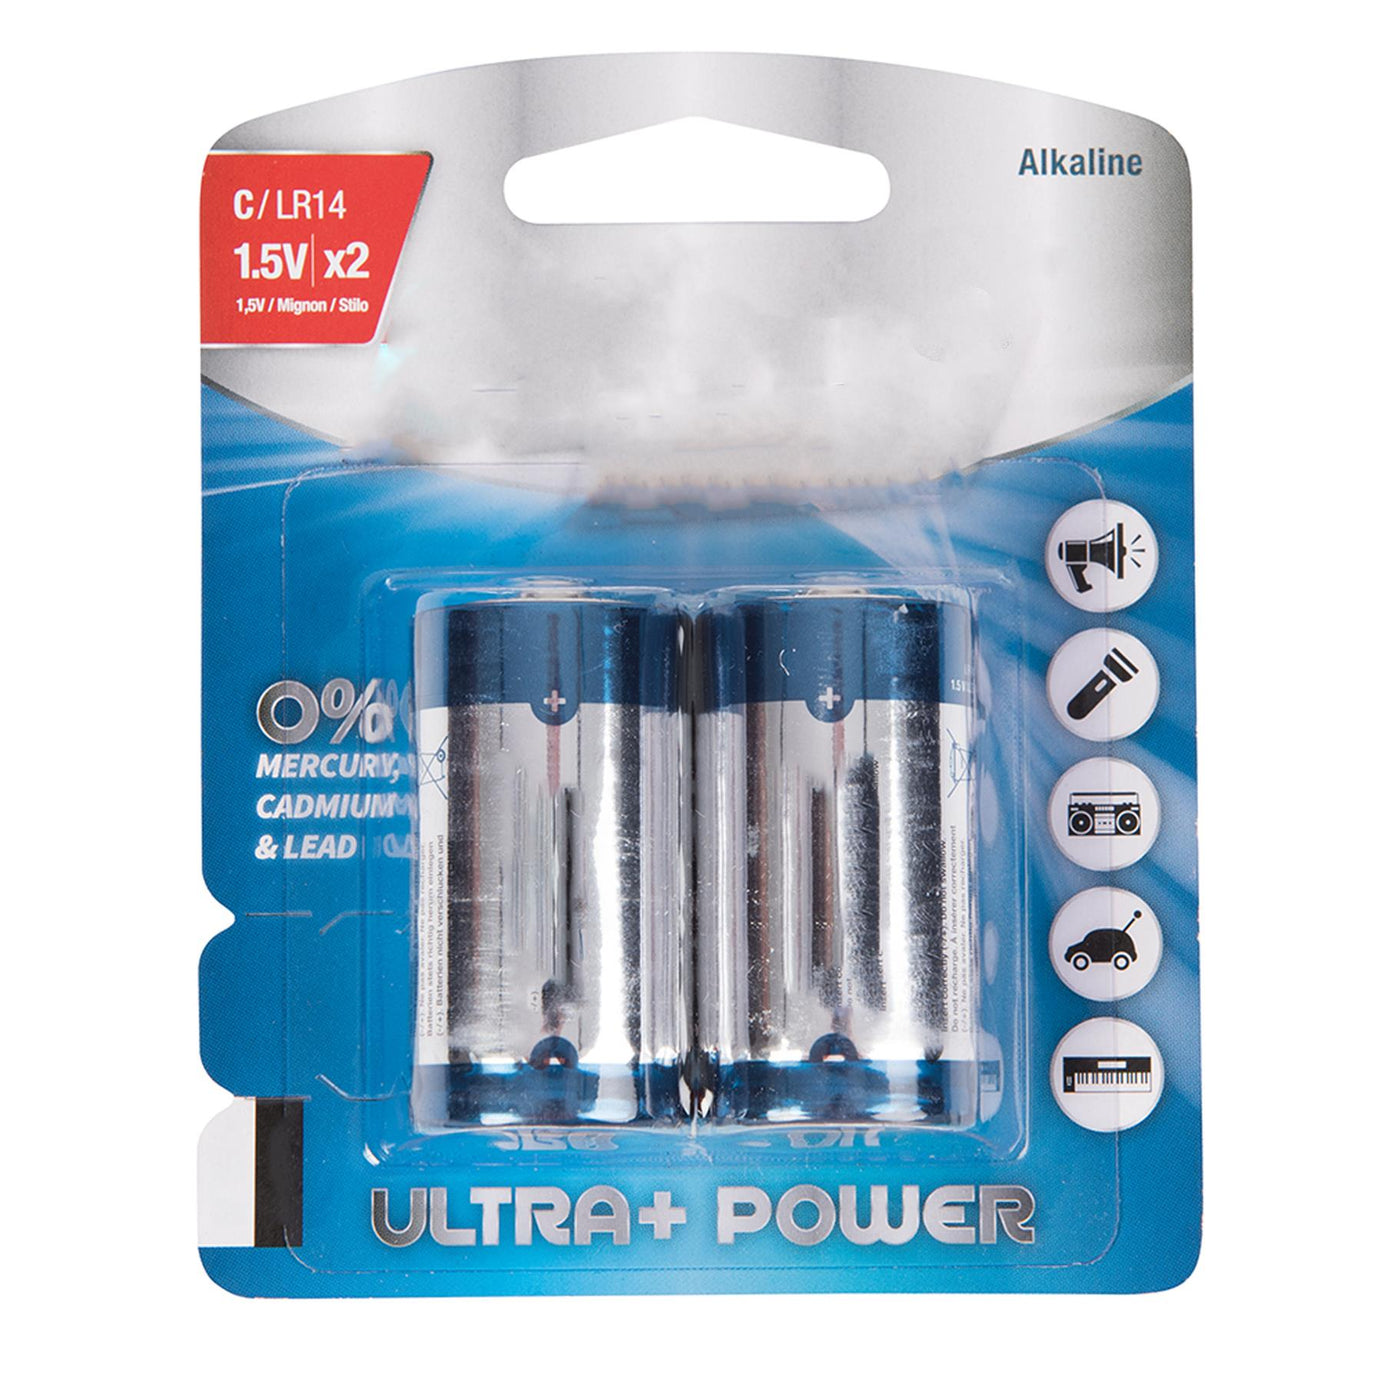 Long lasting high performance C-Type Super Alkaline Battery LR14 2pk  0% Mercury